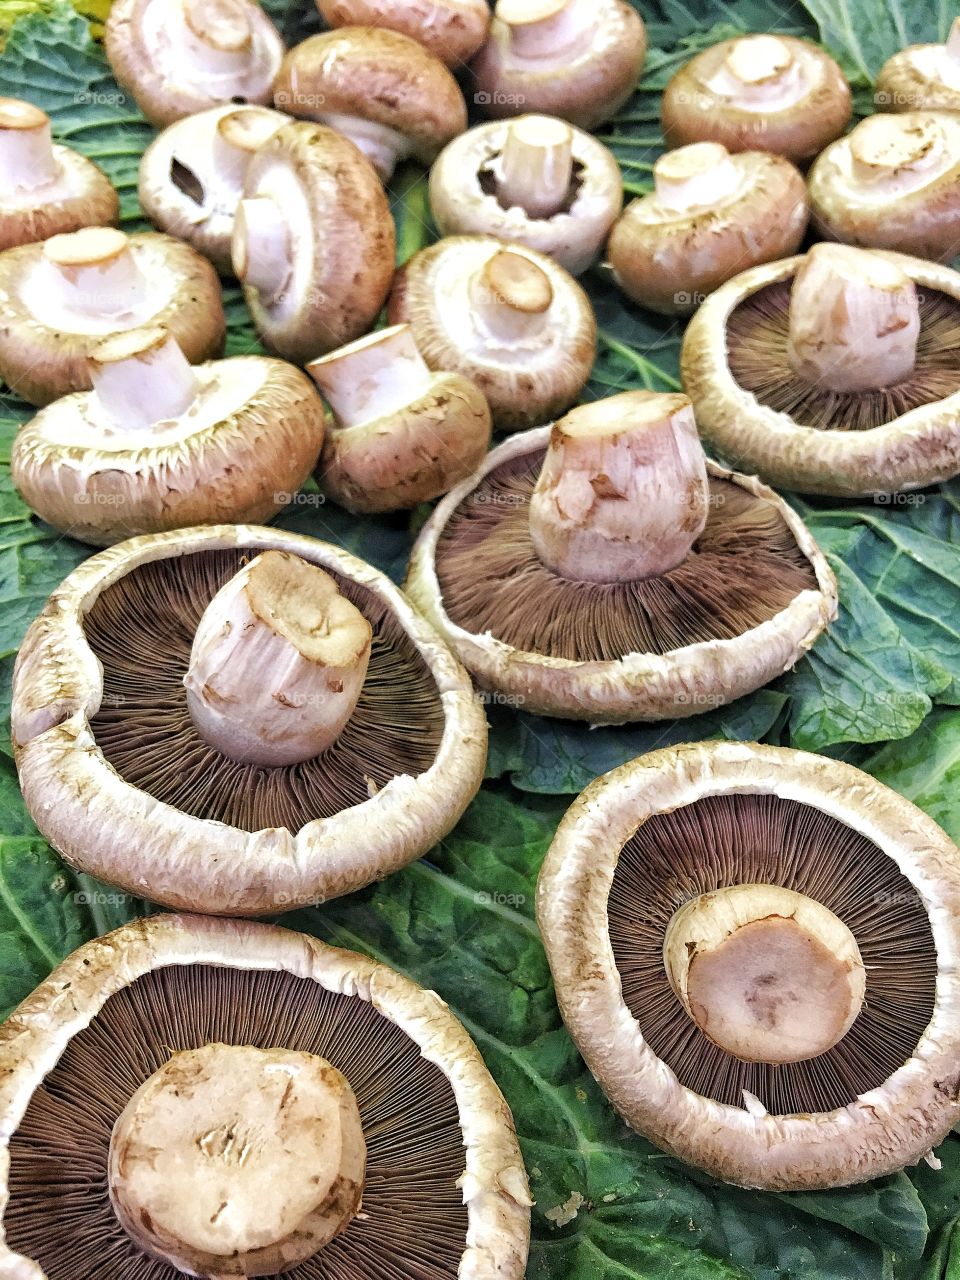 Hunting for mushrooms